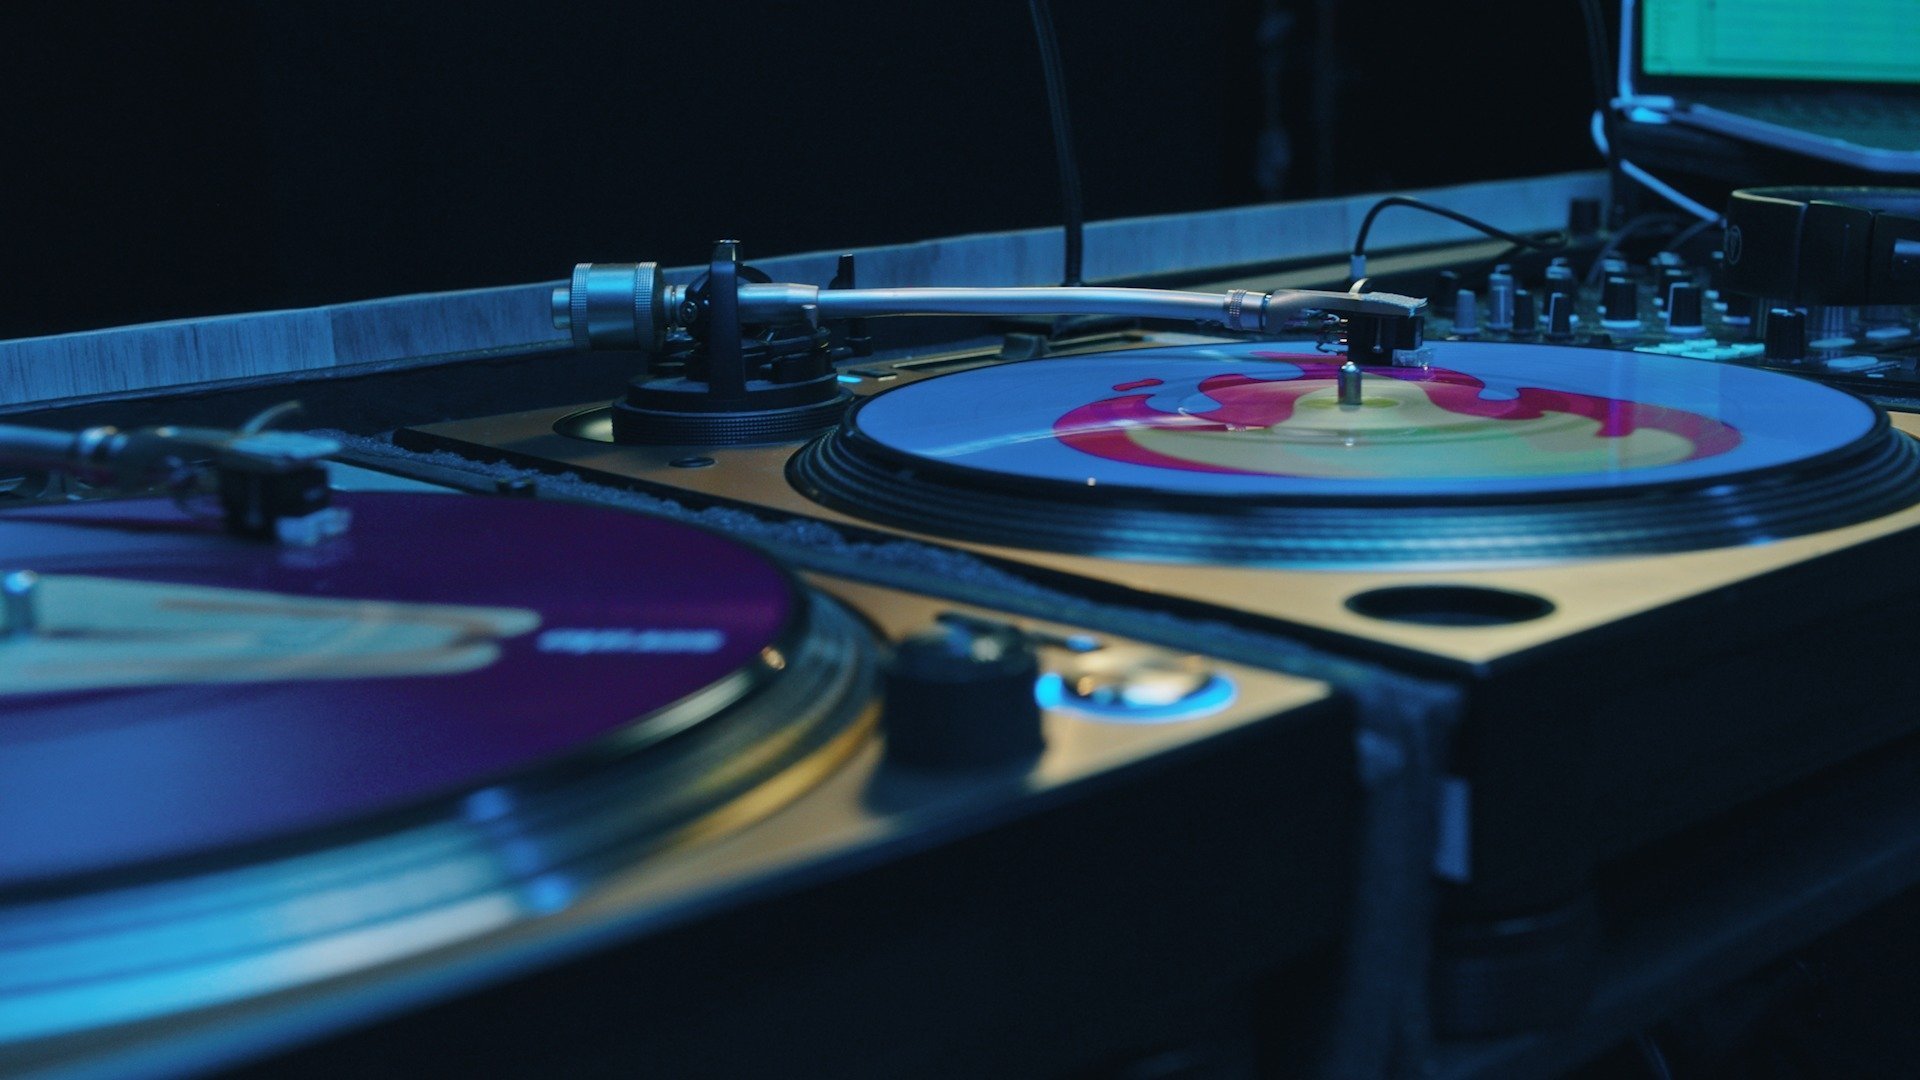 A Questlove Setup: Equipment. Questlove Teaches Music Curation and DJing